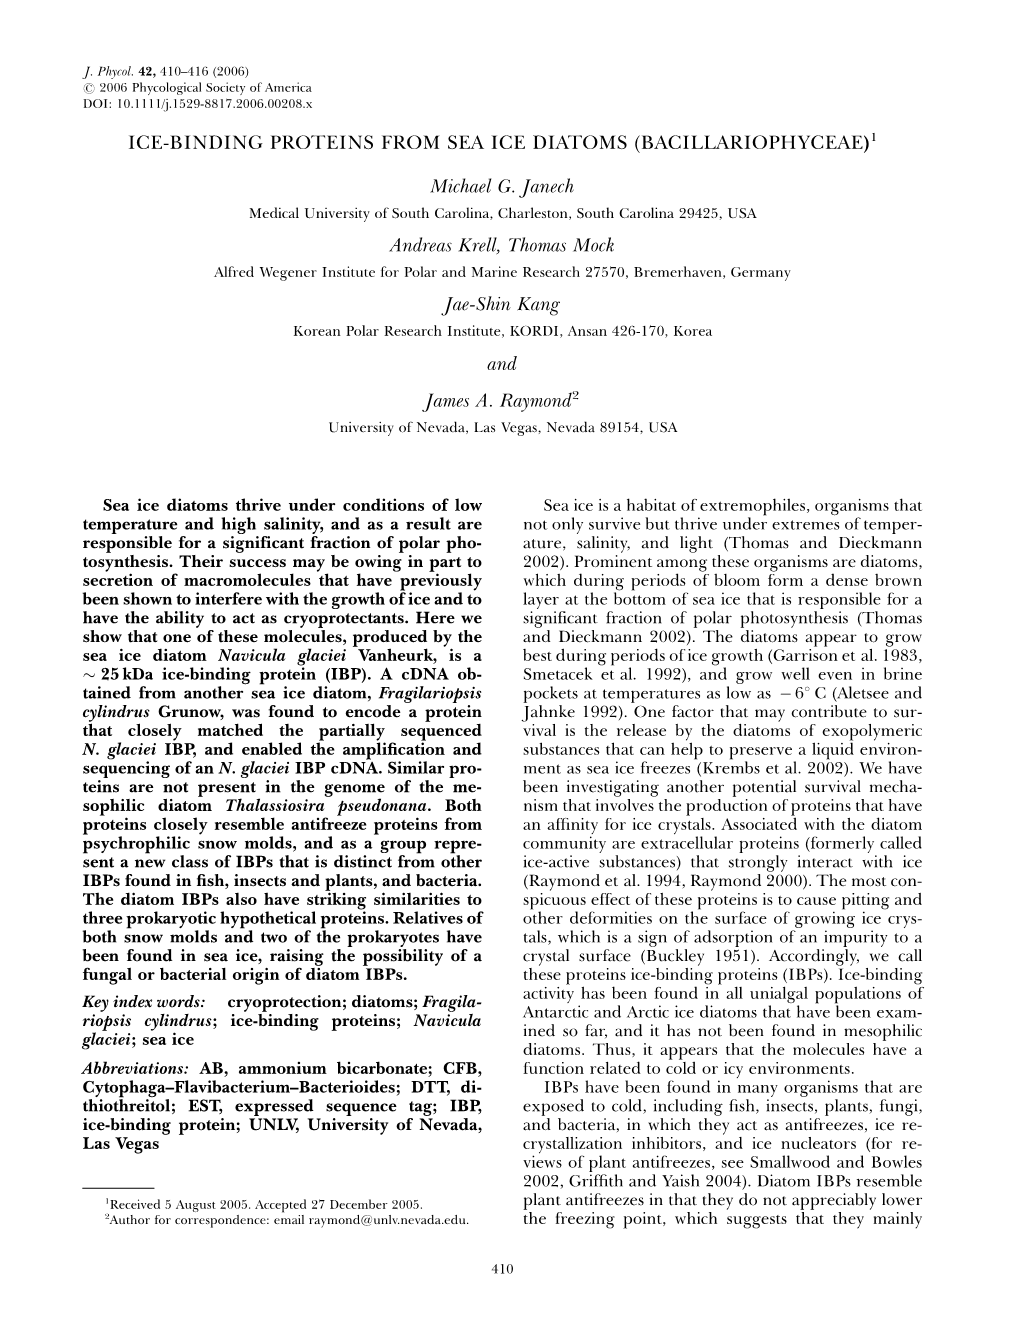 Ice-Binding Proteins from Sea Ice Diatoms (Bacillariophyceae)1